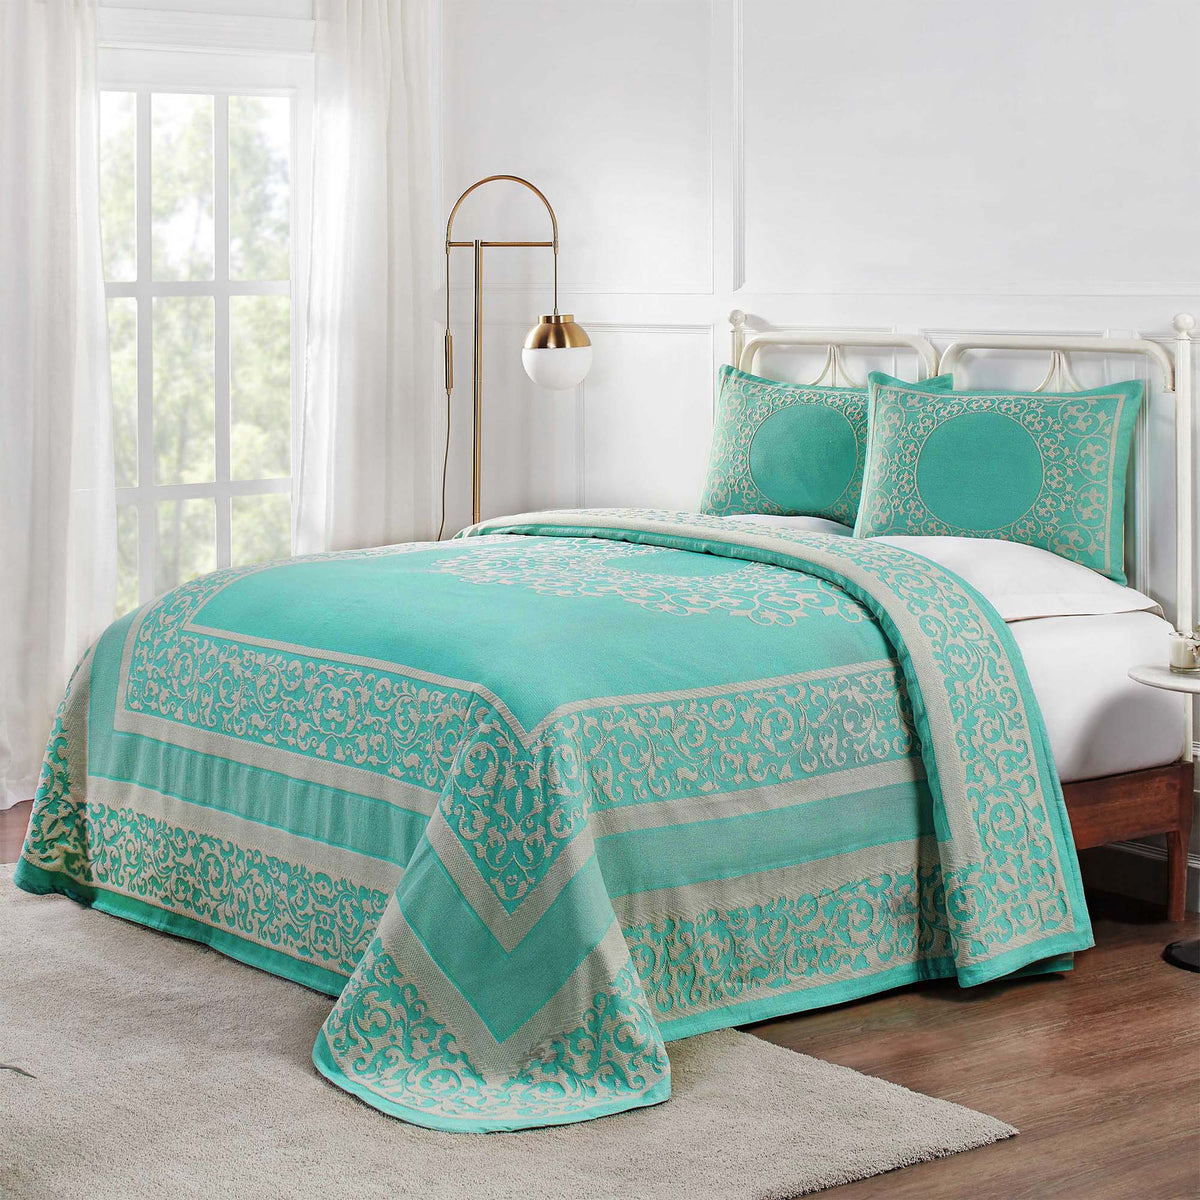 Superior Lyron Cotton Blend Woven Jacquard Vintage Floral Scroll Lightweight Bedspread and Sham Set  - Turquoise